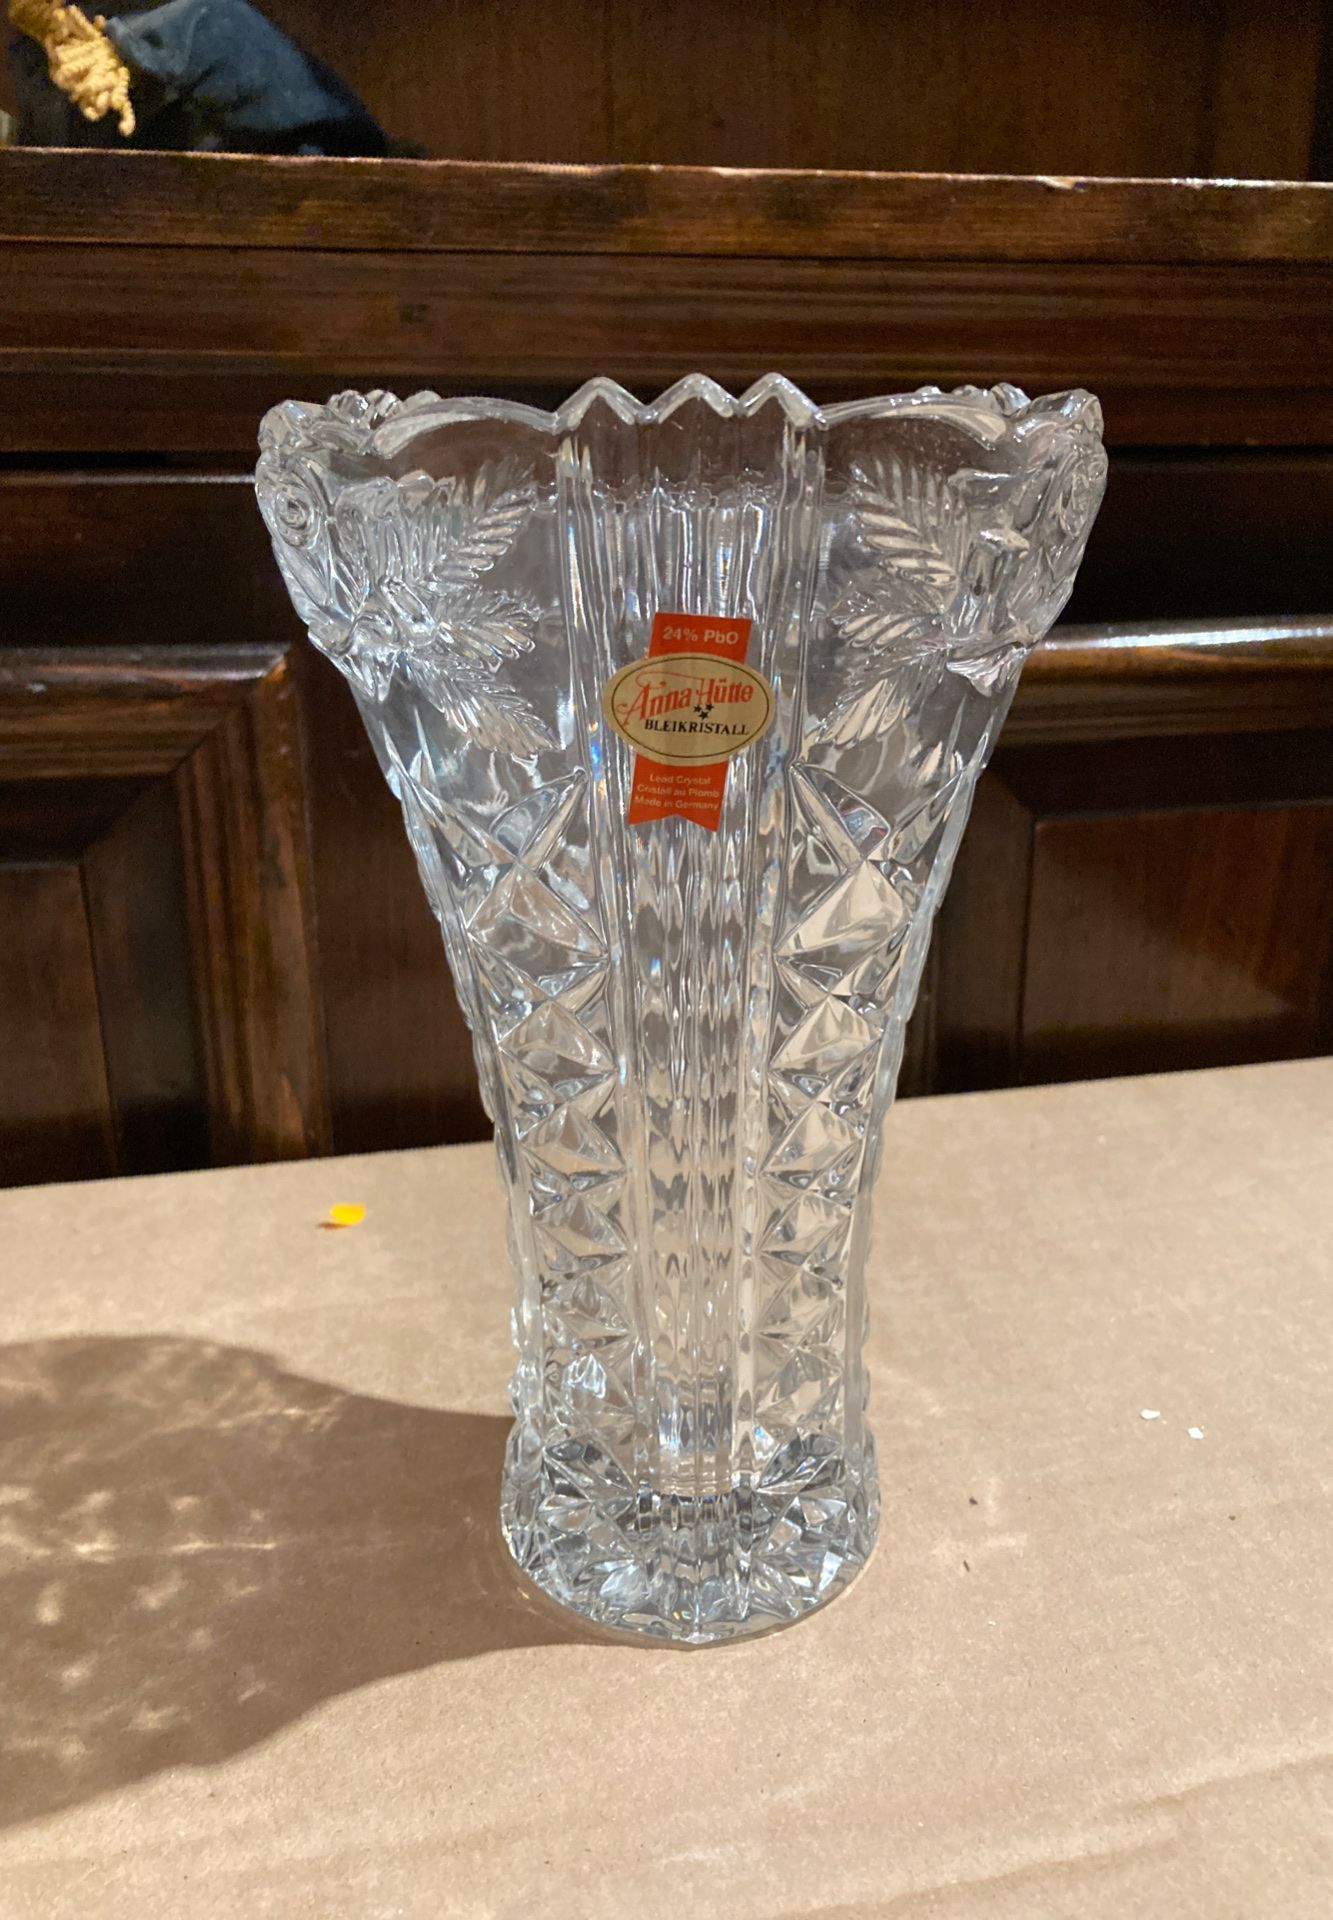 Anna Hutte Germany NIB Dorsette Lead Crystal Glass Vase Floral